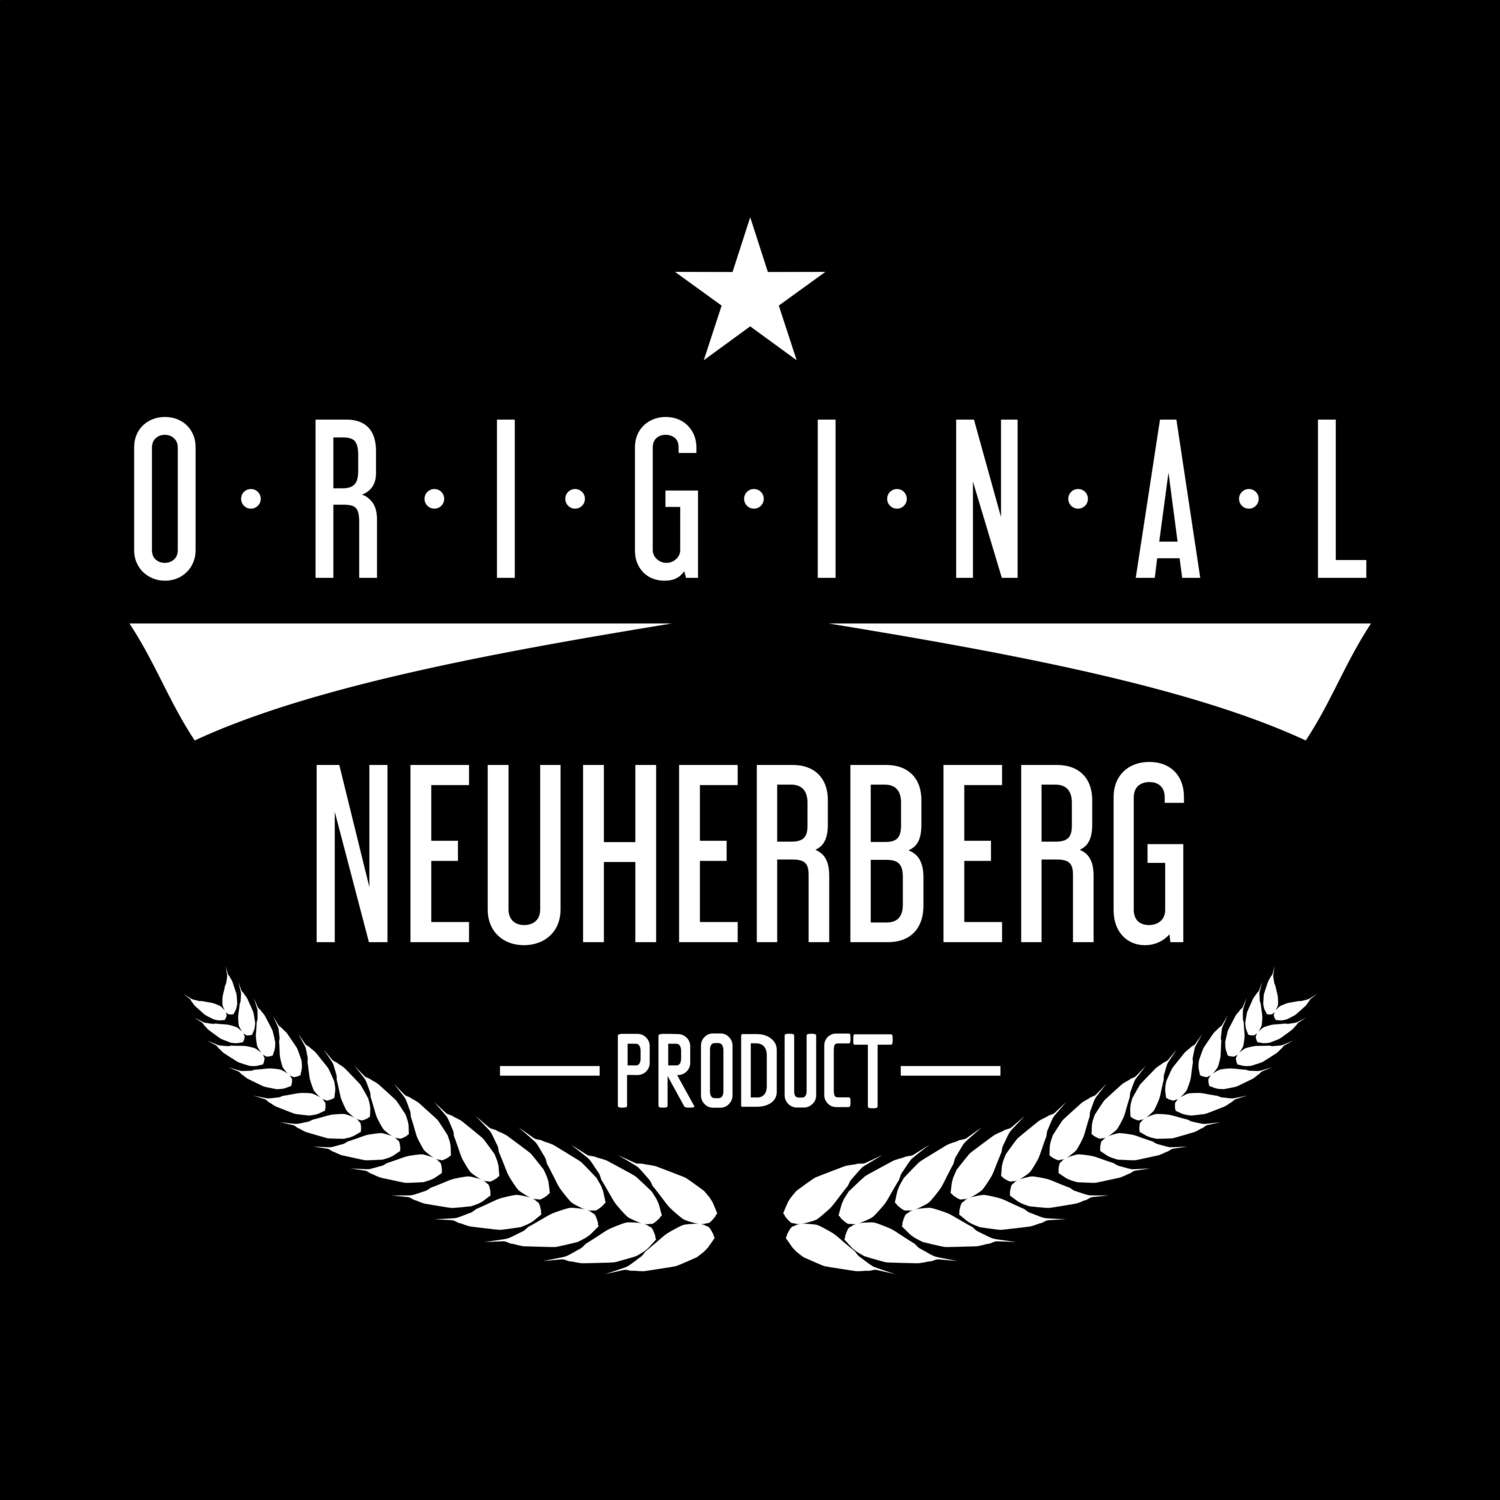 Neuherberg T-Shirt »Original Product«